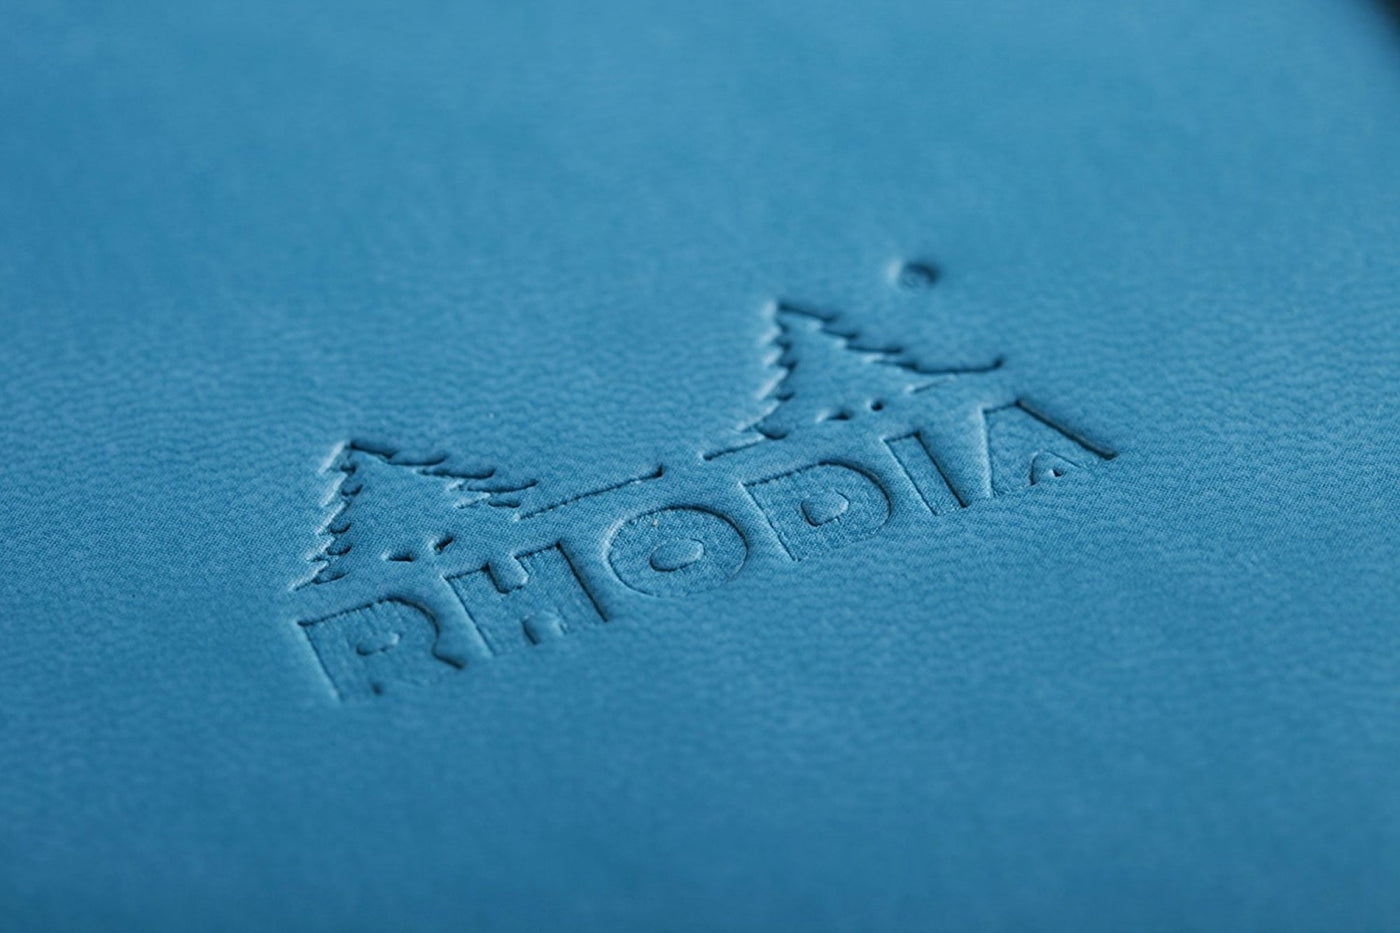 Rhodia Rhodiarama Hard Cover A6 Turquoise Lined Webnotebook Logo